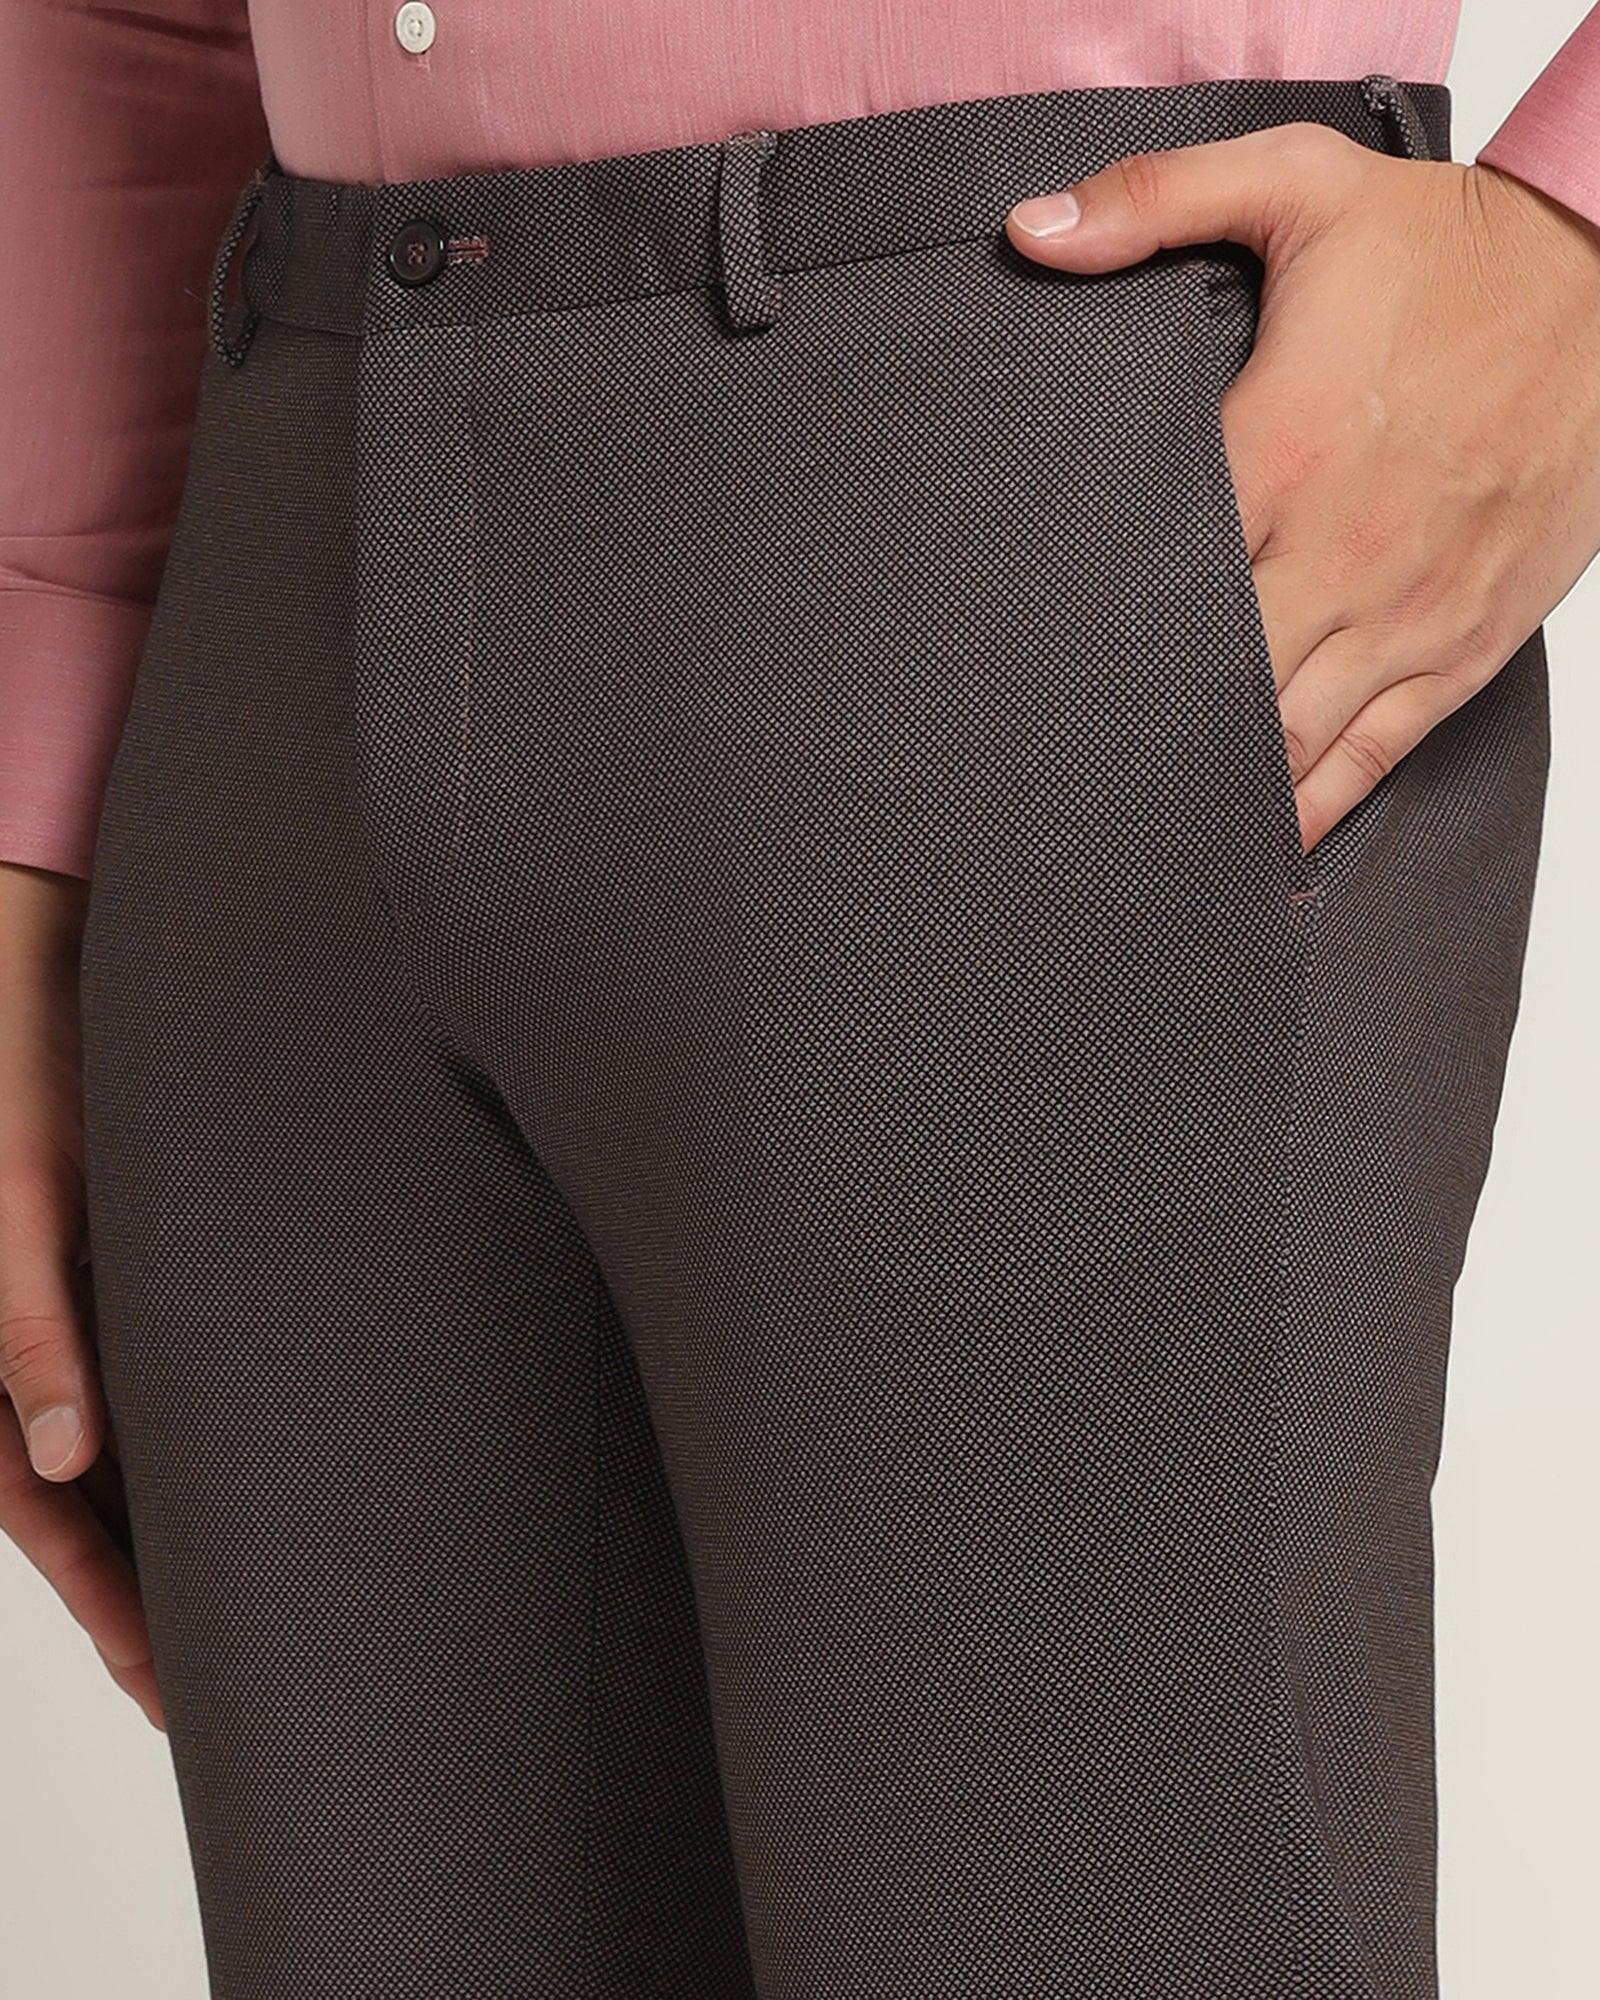 Formal Trouser: Browse Men Navy Blue Cotton Blend Formal Trouser on Cliths